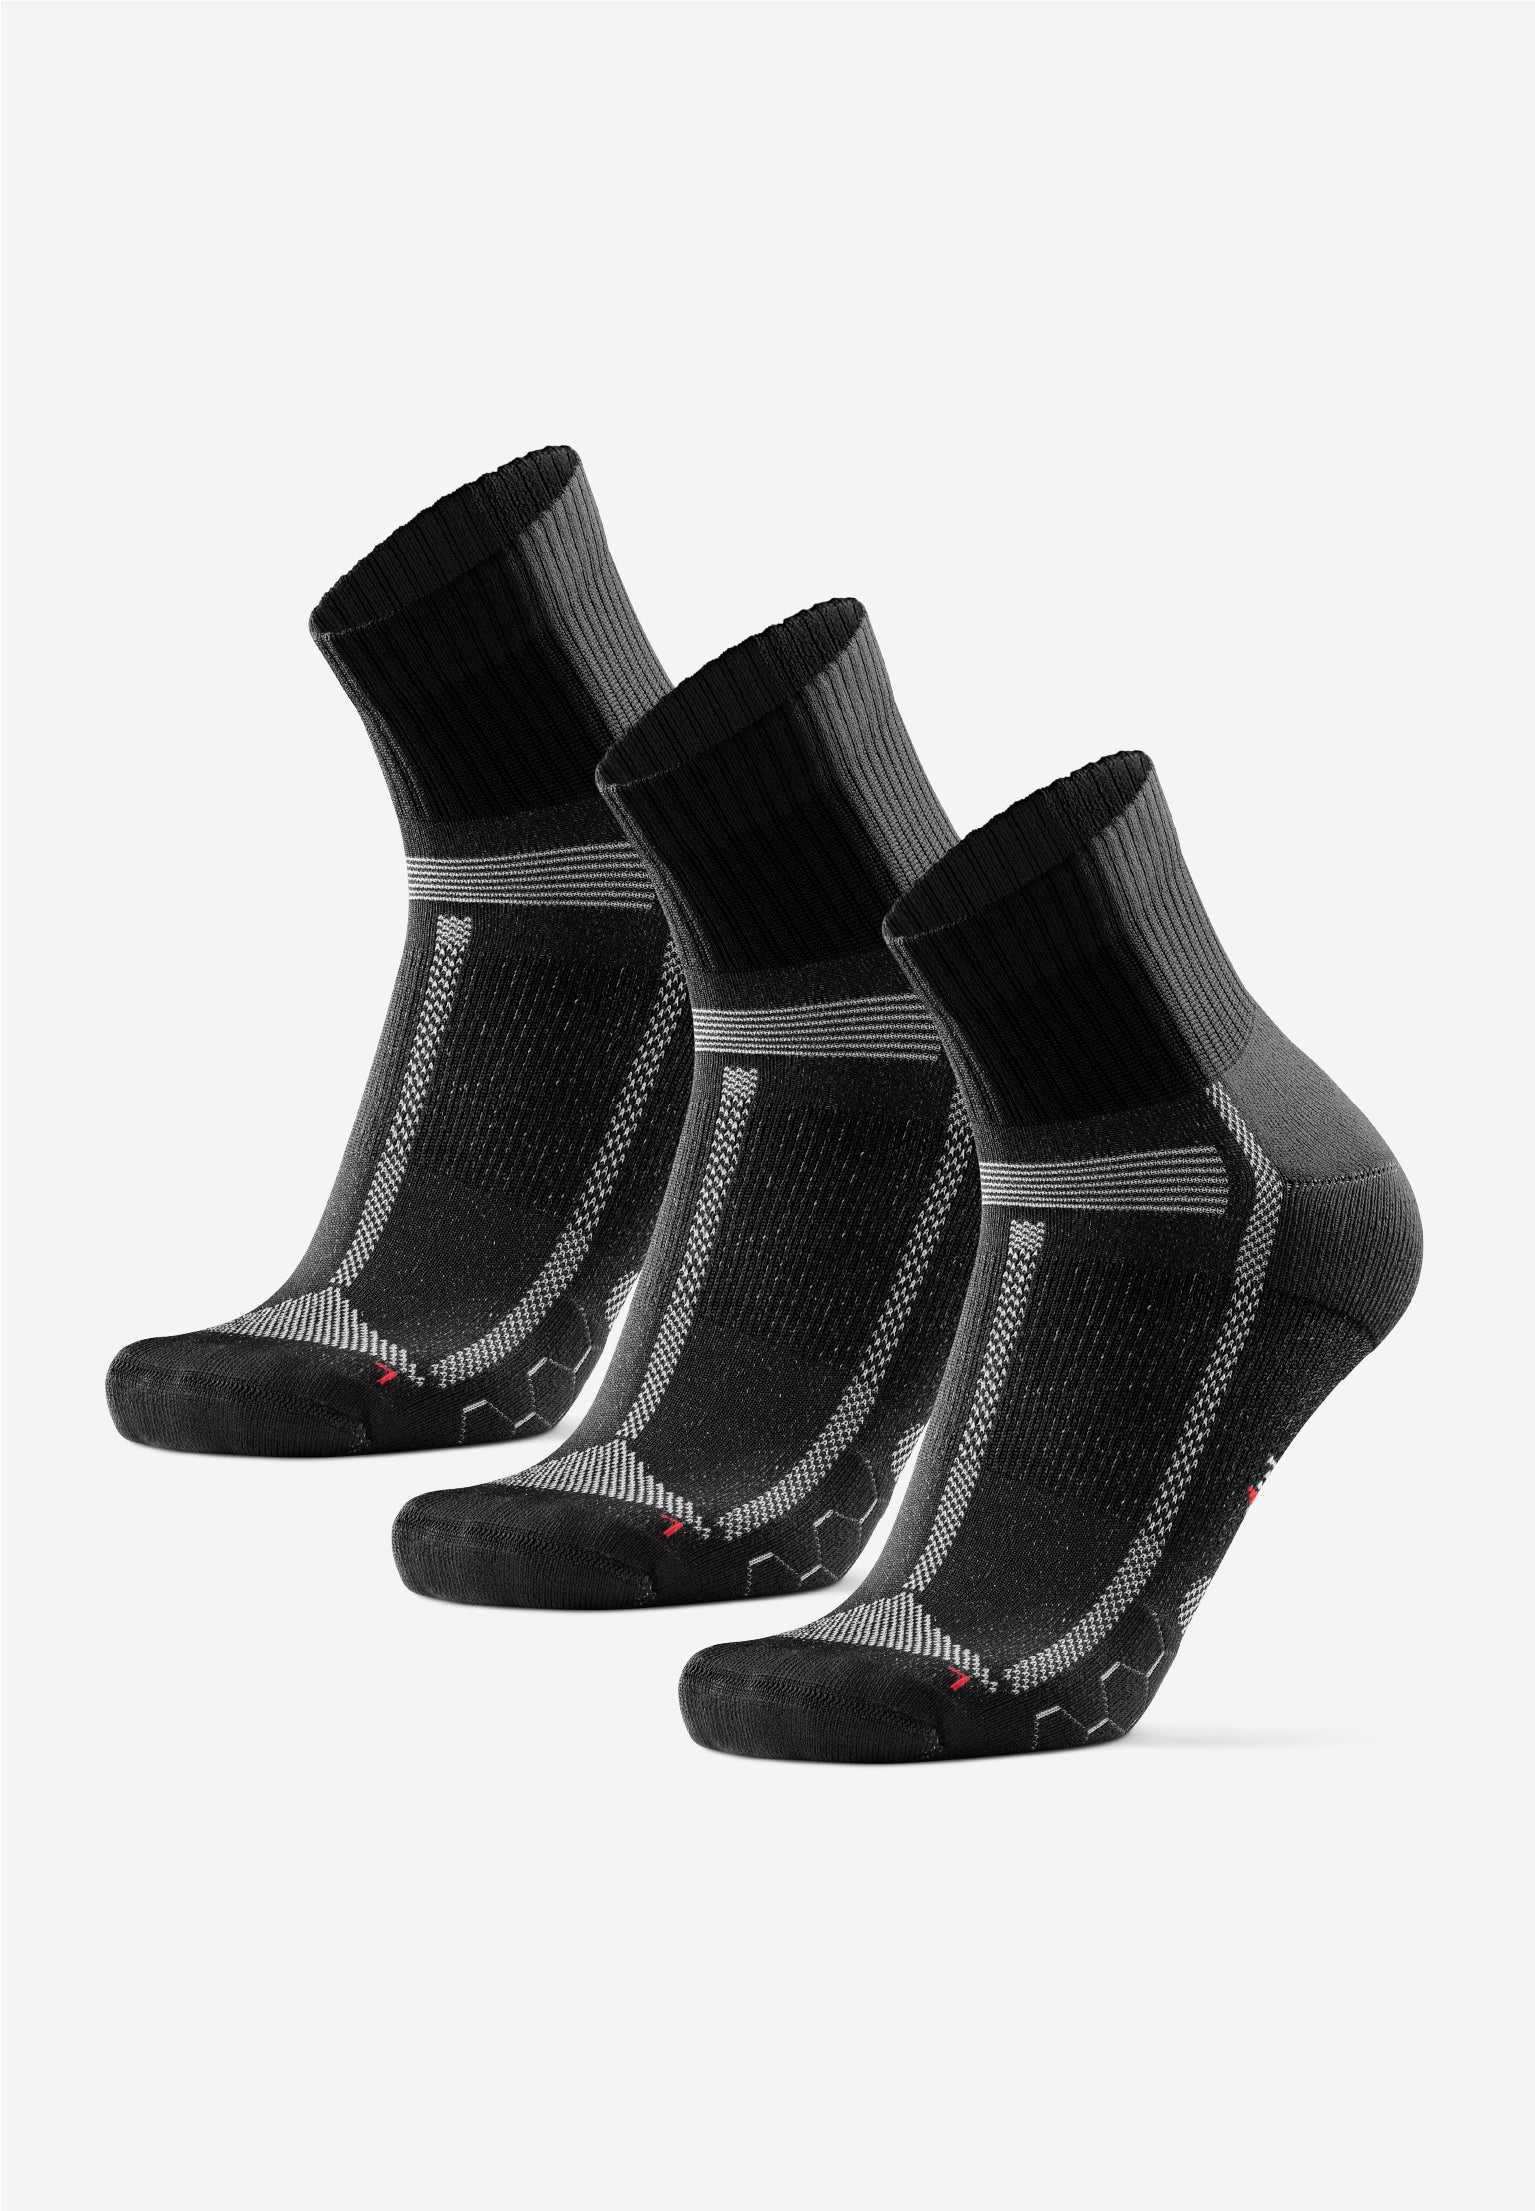 DANISH ENDURANCE 3 Pack Low-Cut Long Distance Running Socks, Men & Women